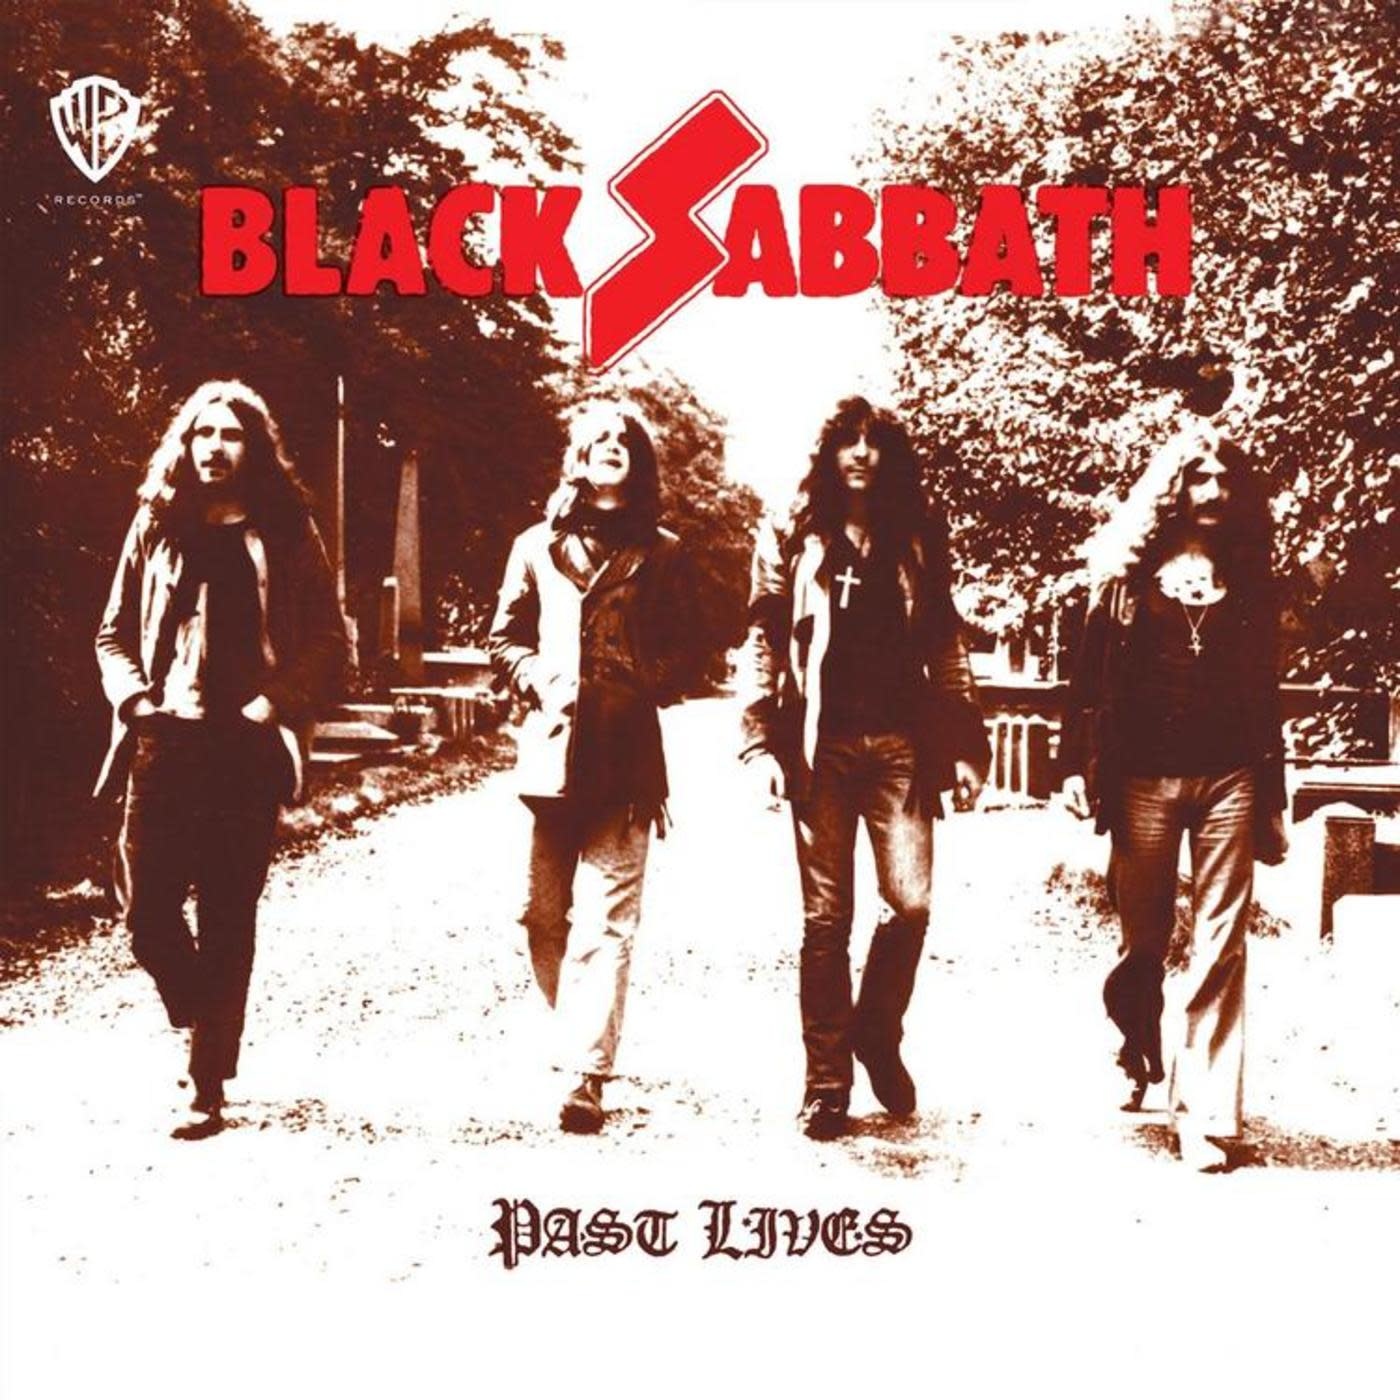 Black Sabbath – Past Lives